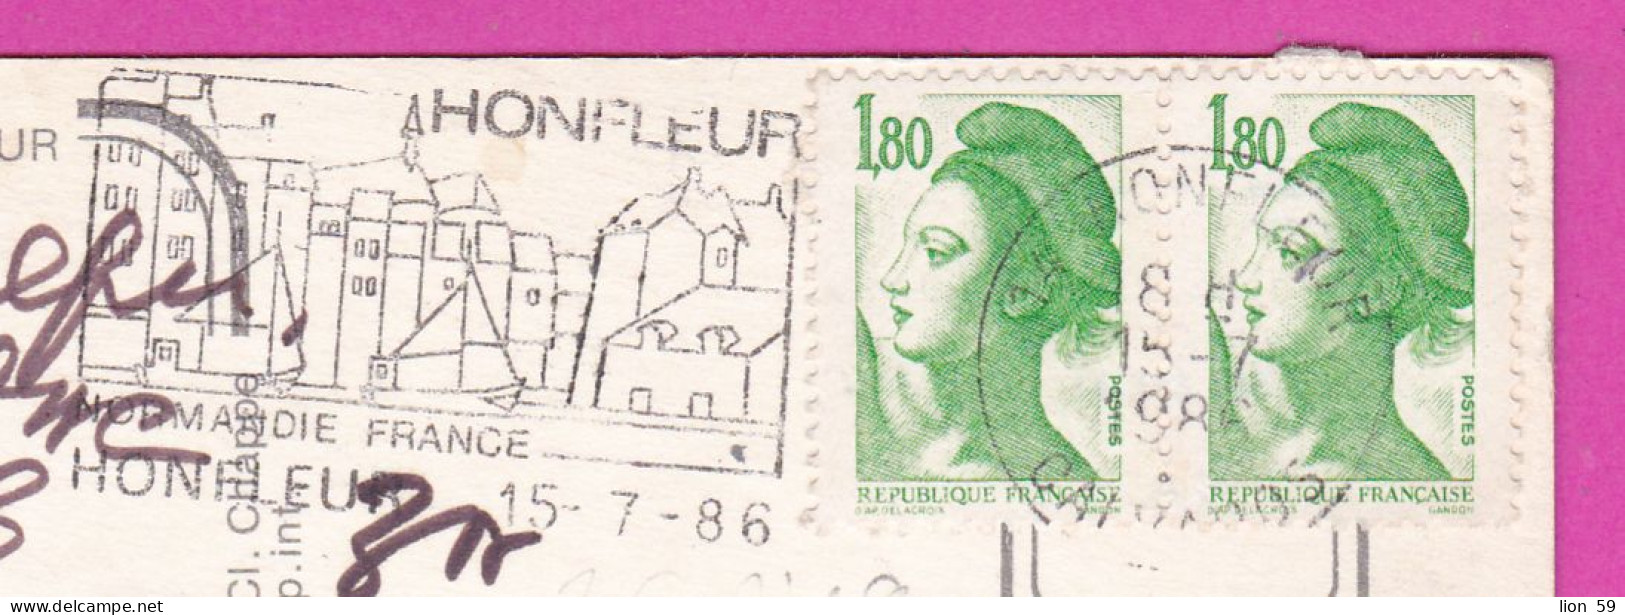 294214 / France - Normandie , HONFLEUR PC 1985 Serres-Caste USED 1.80+1.80 Fr. Liberty Of Gandon , Flamme HONFLEUR  Norm - 1982-1990 Liberty Of Gandon